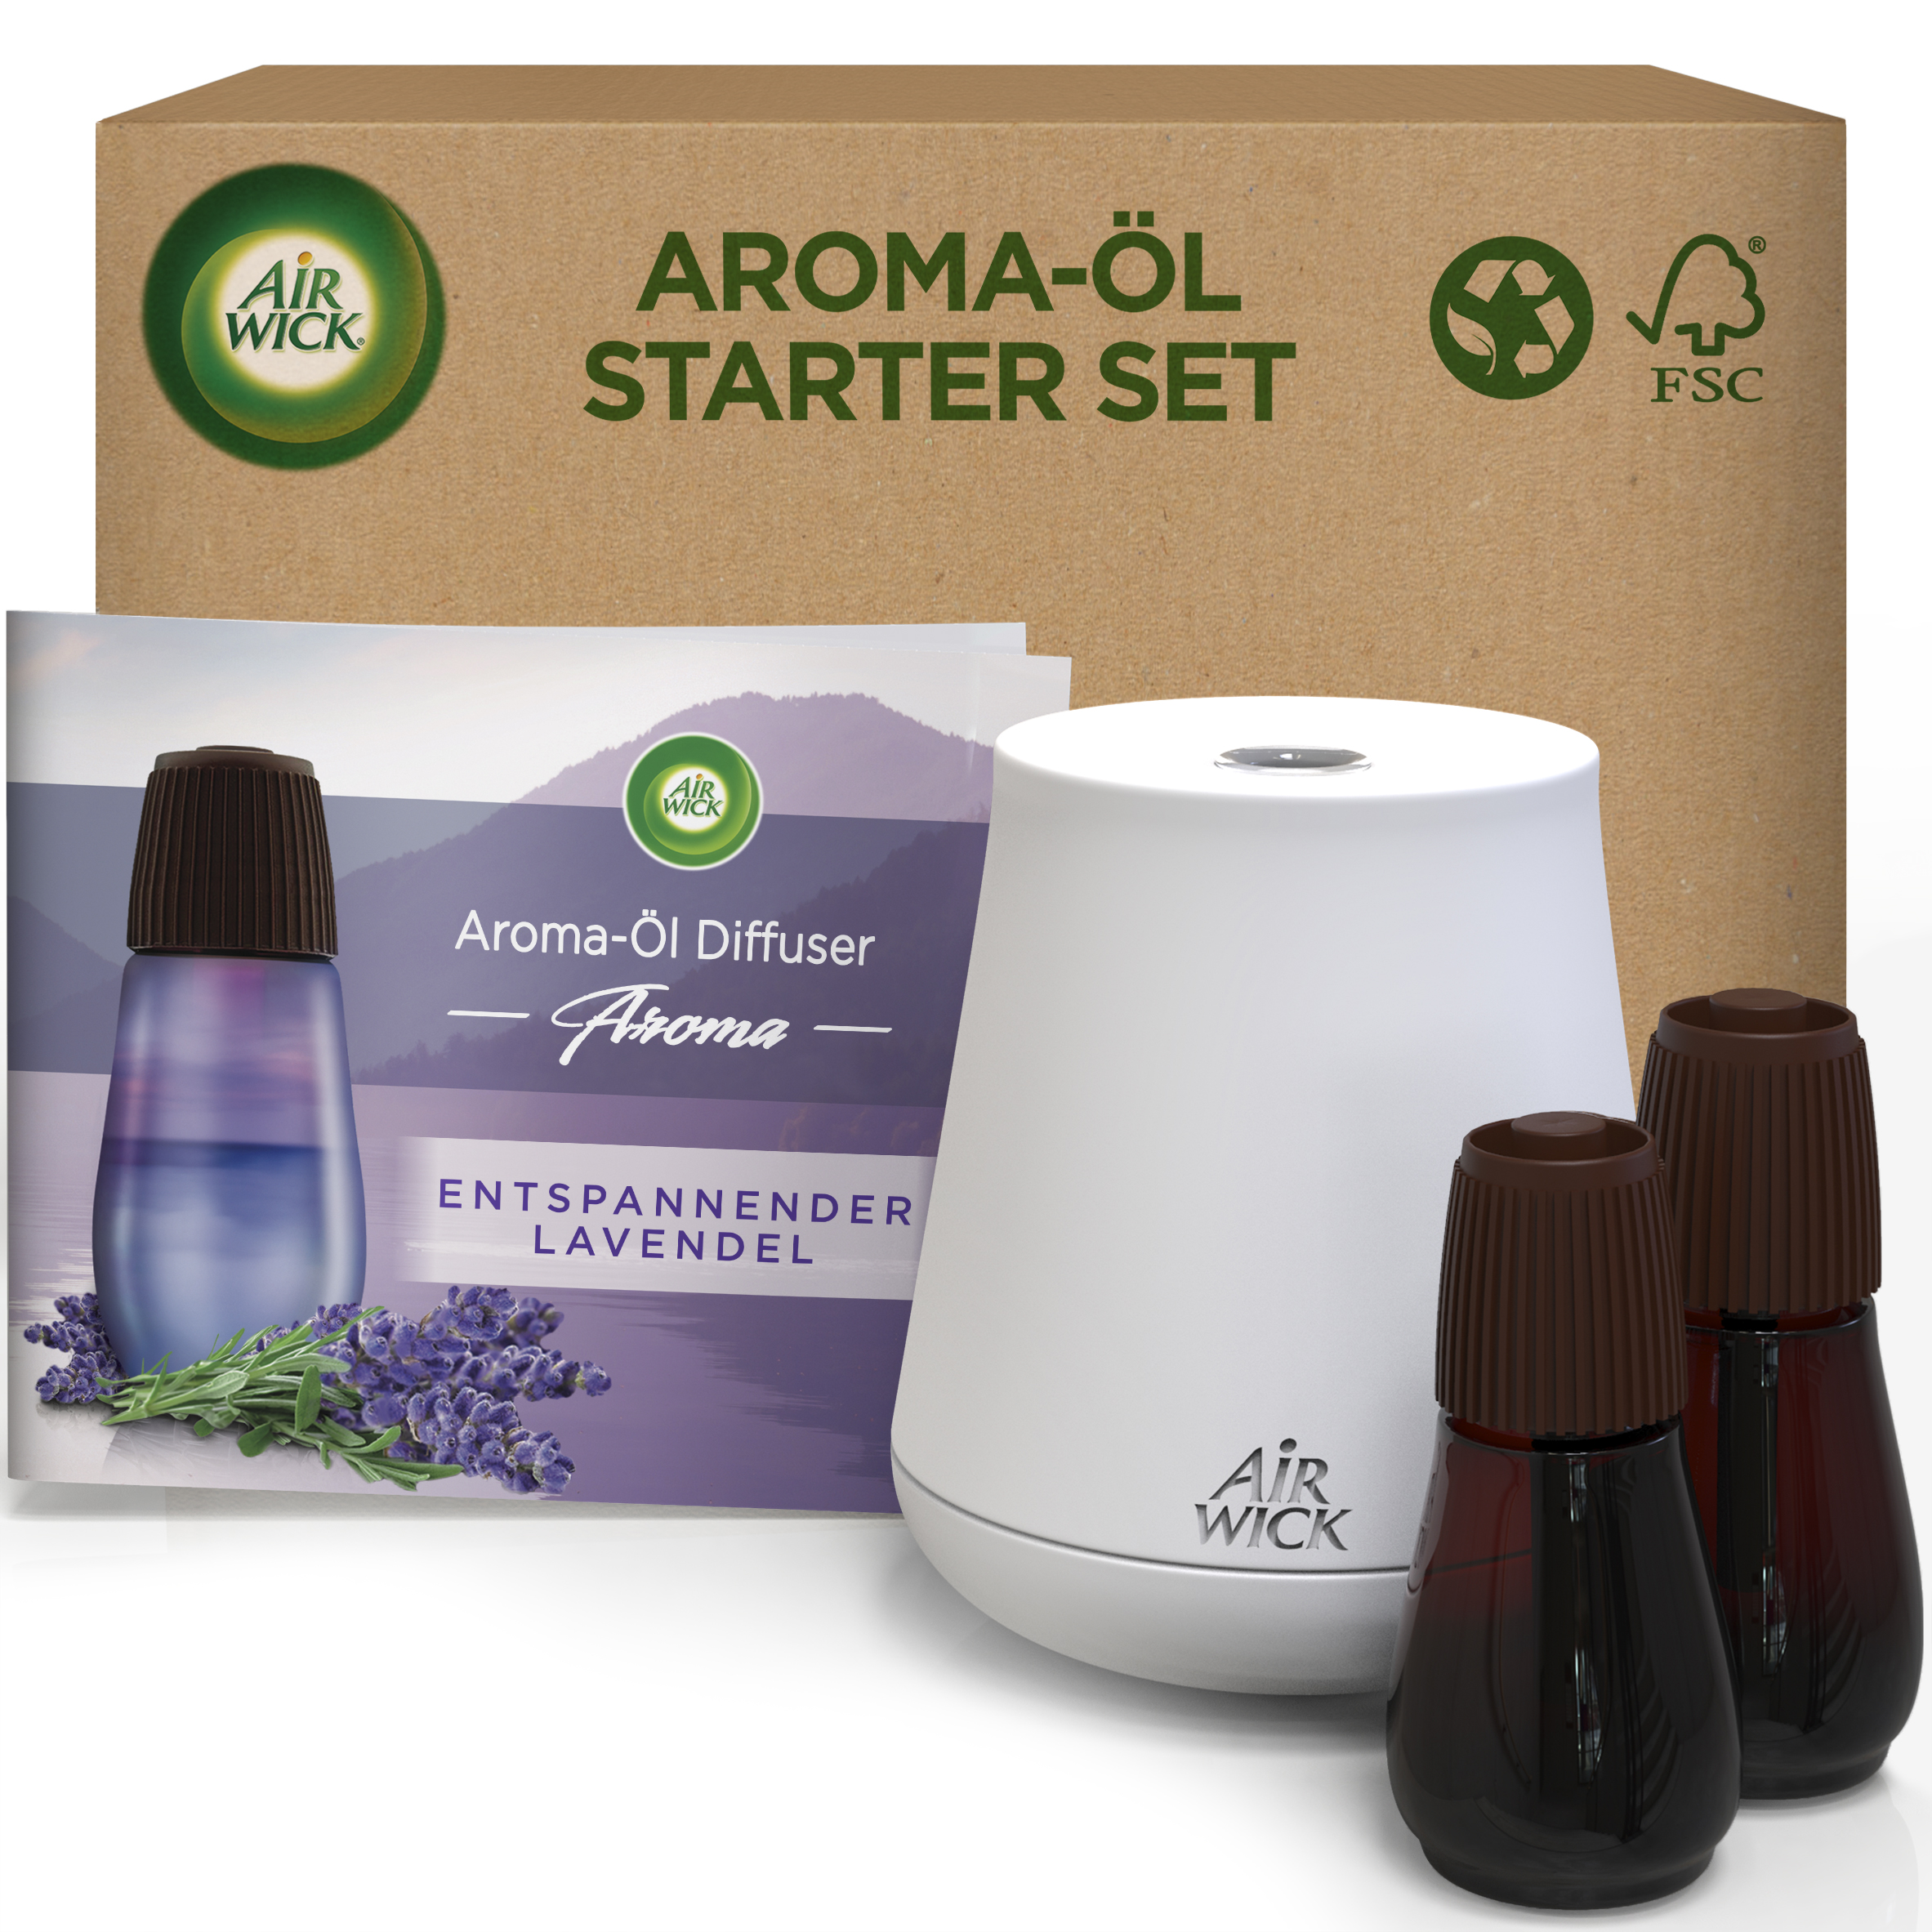 Air Wick Aroma-Öl Diffuser eCom Starter-Set Entspannender Lavendel